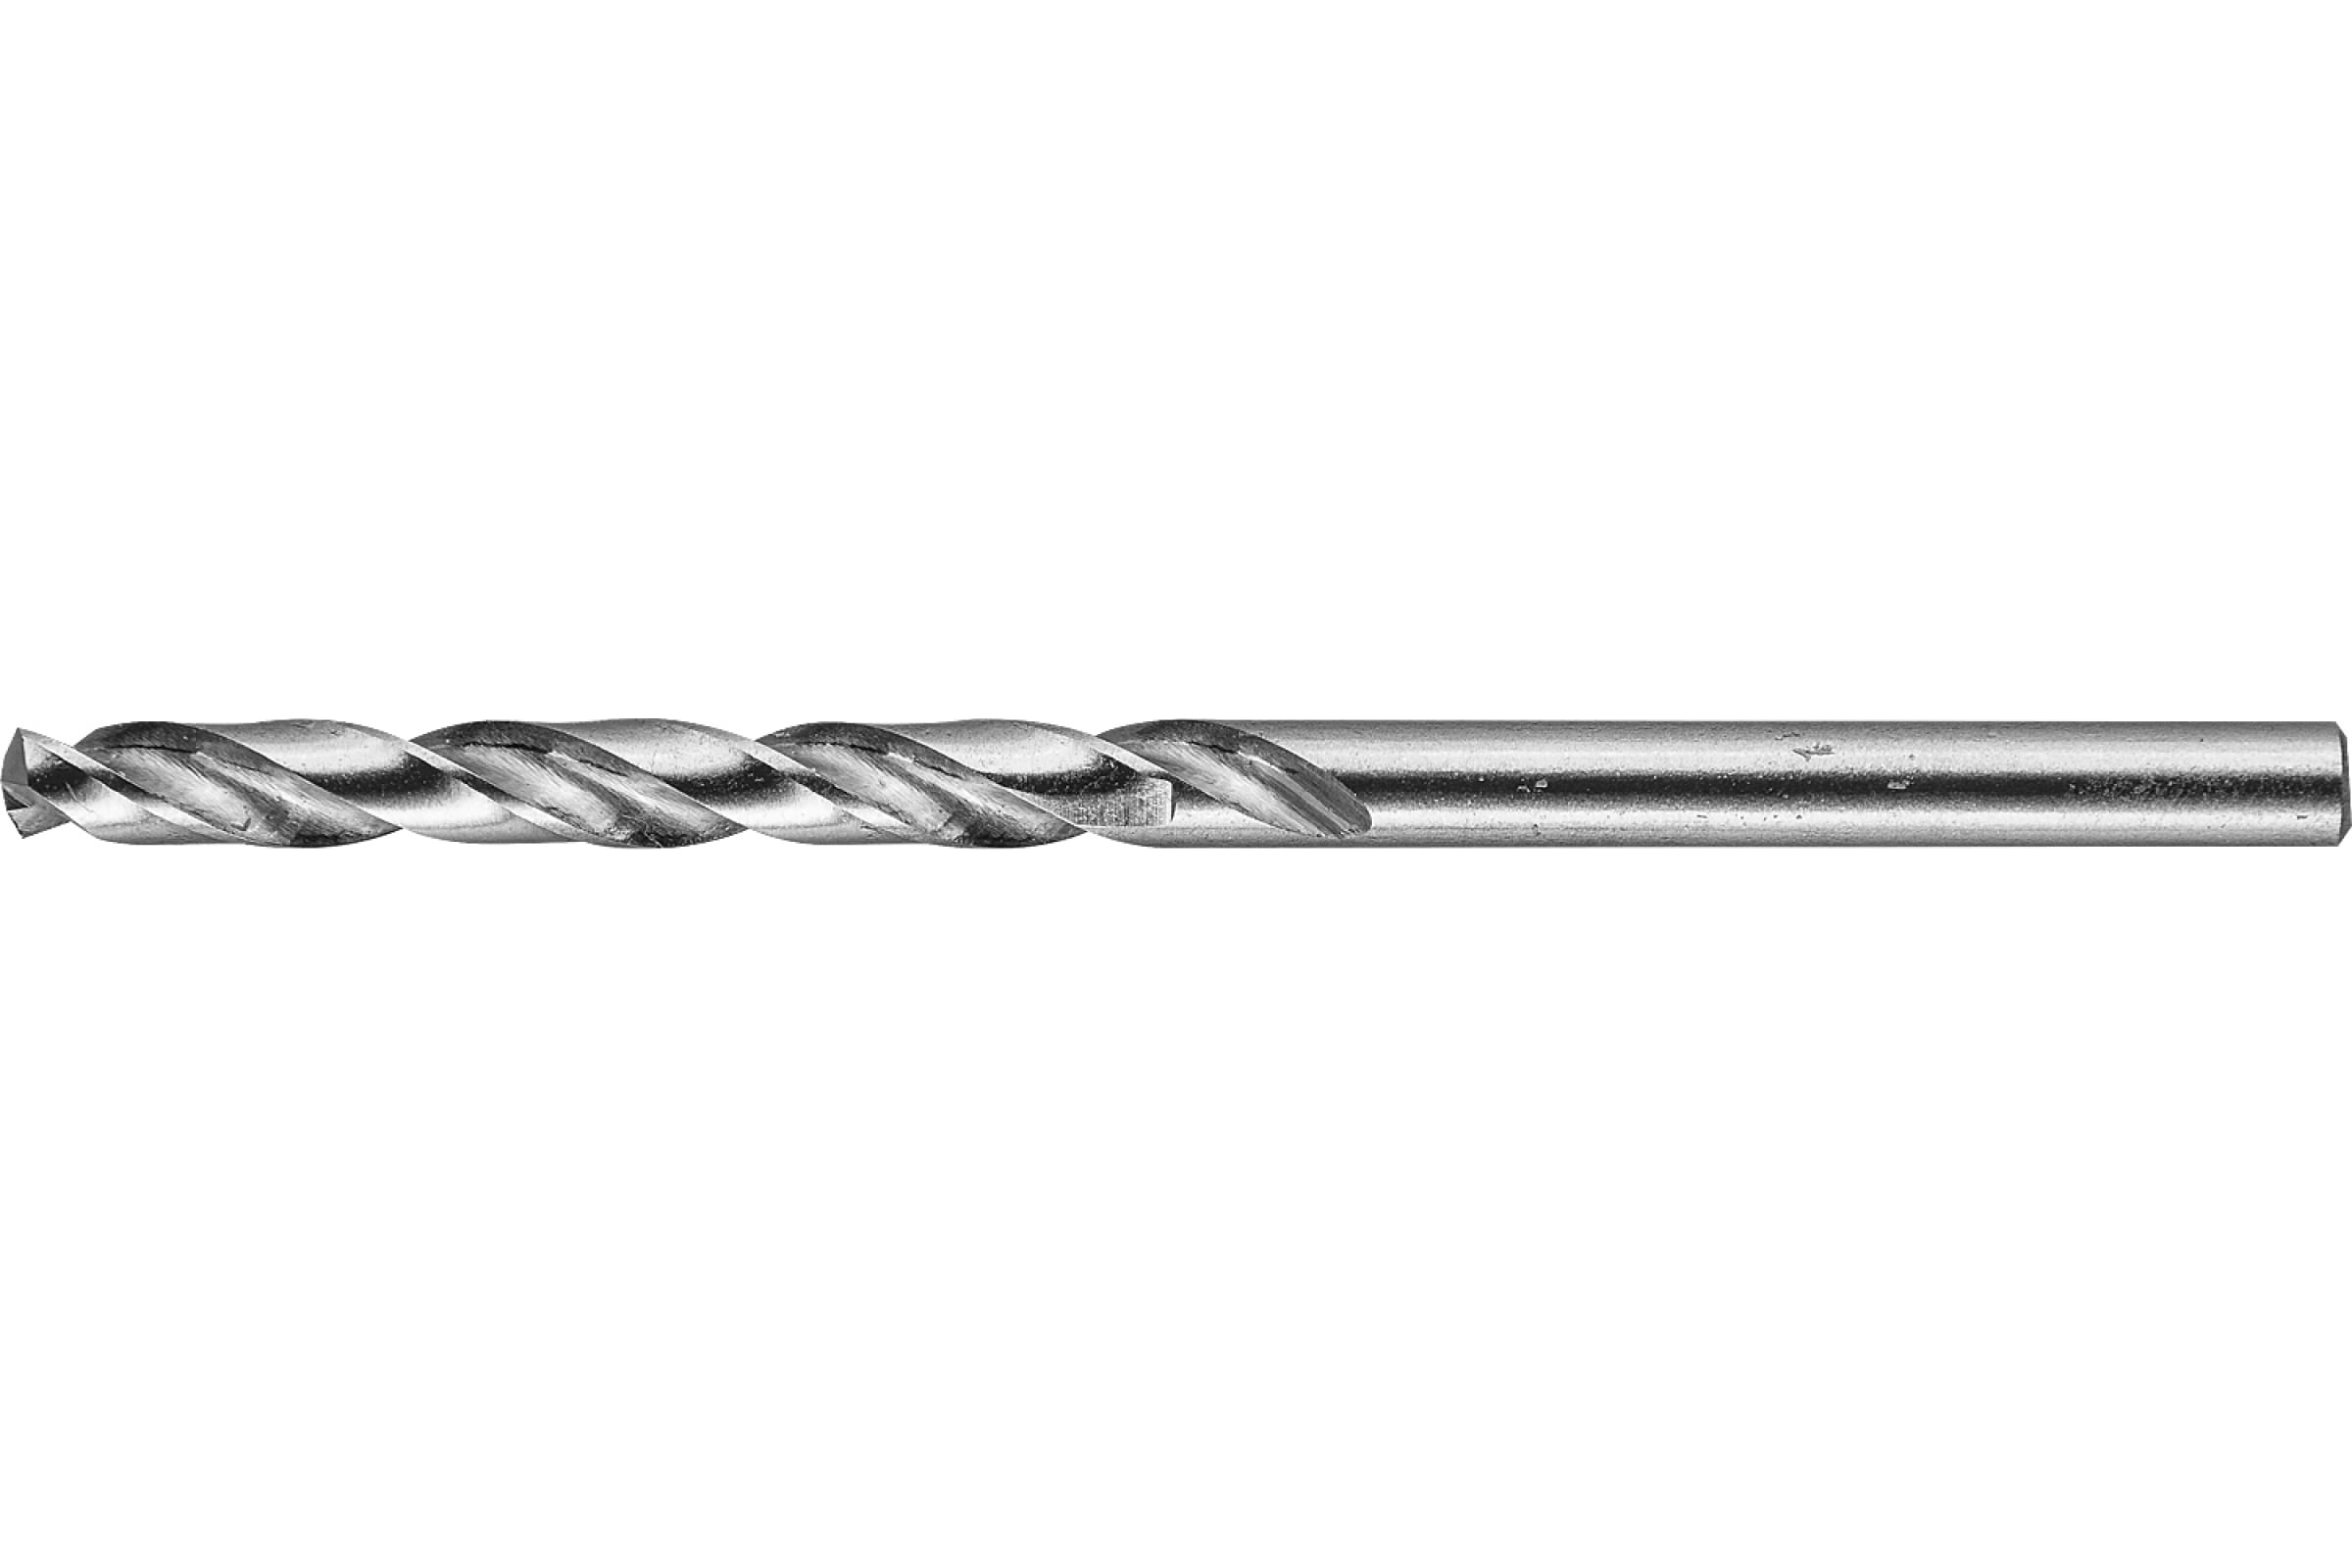 Сверло ⌀6.3 мм x 10.1 см/6.3 см, Р6М5, по металлу, ЗУБР Профессионал, класс A, 1 шт. (29625-6.3)